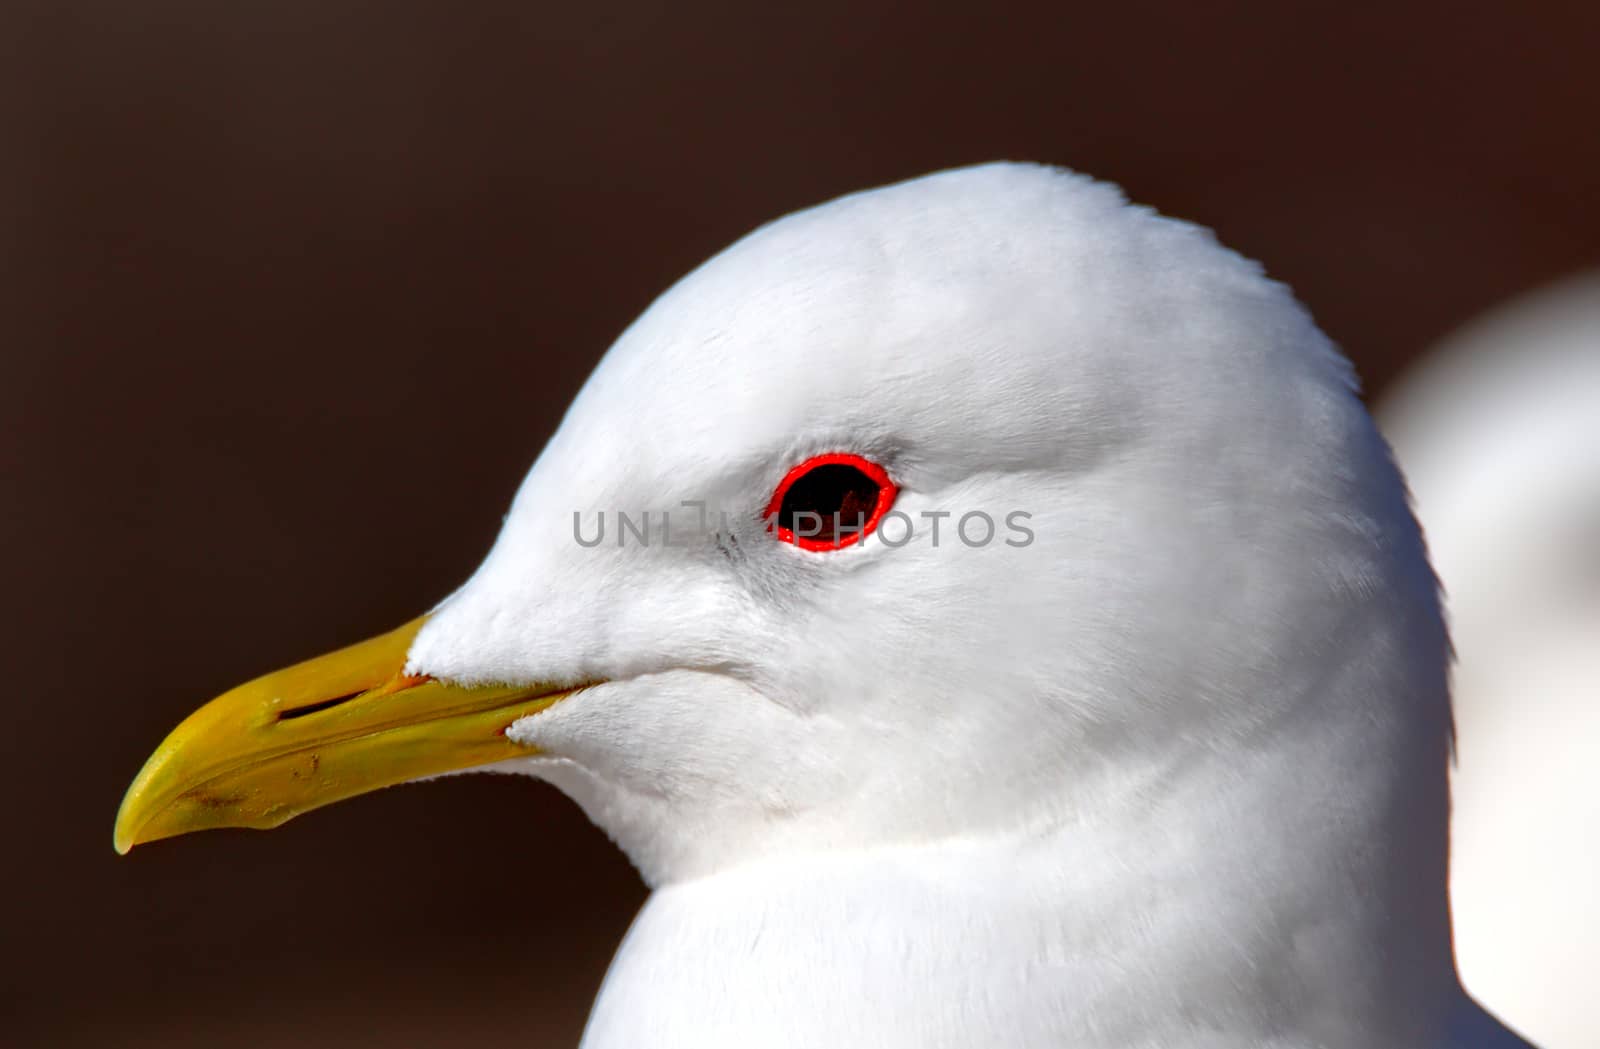 A white gull closeup portrait from left side. Red circle around dark eye.